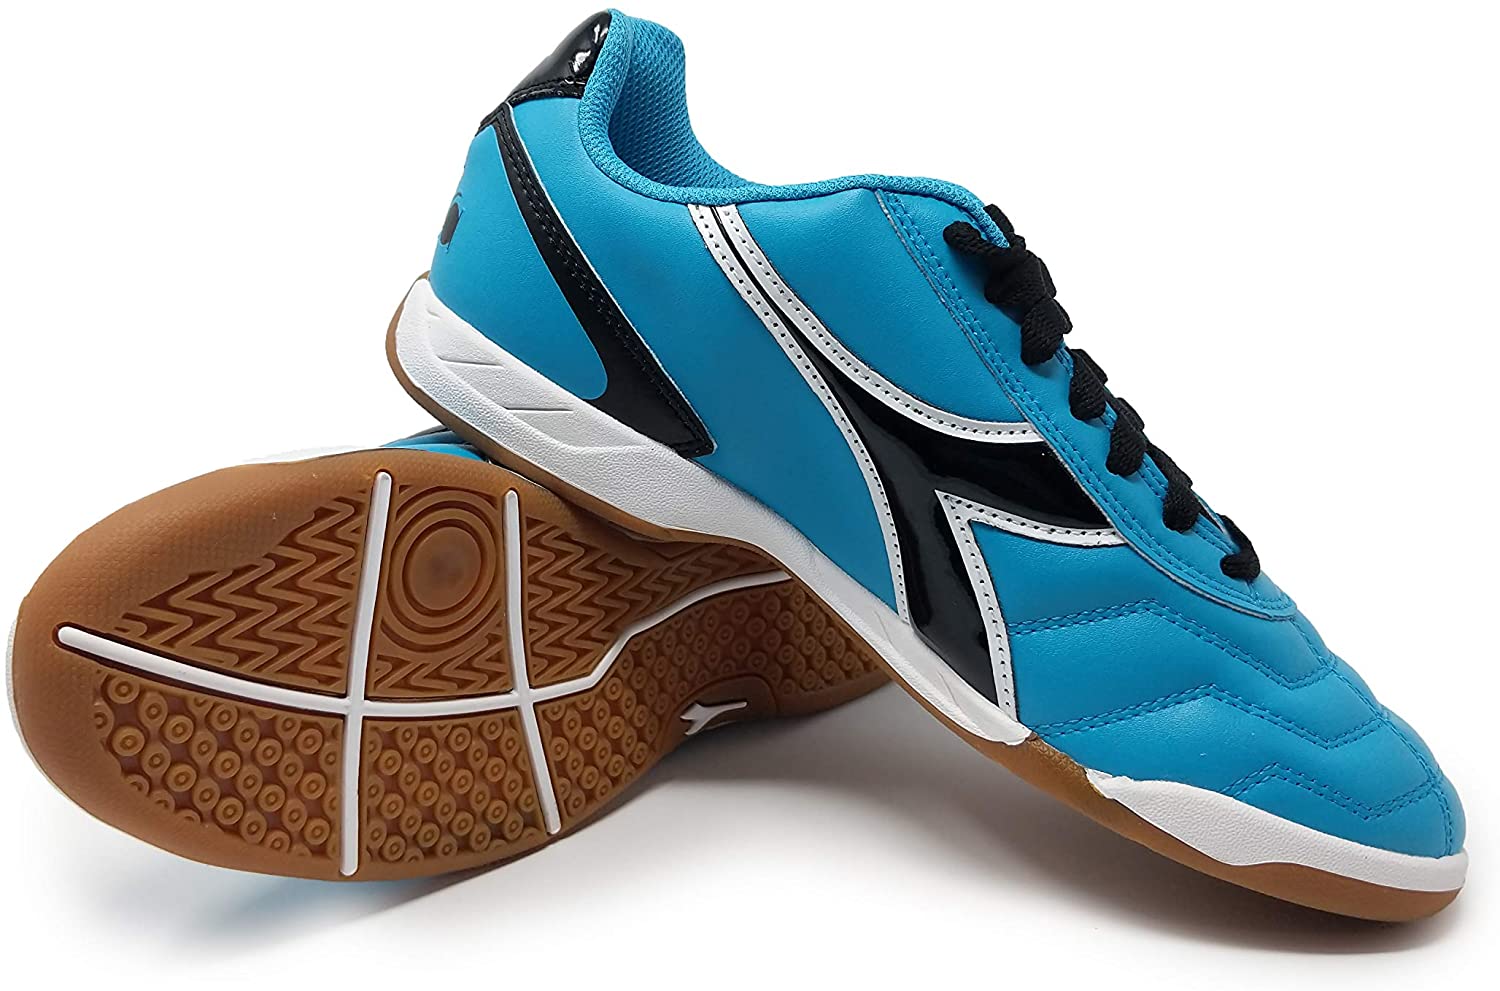 Diadora Women's Capitano ID Indoor Soccer Shoes | eBay